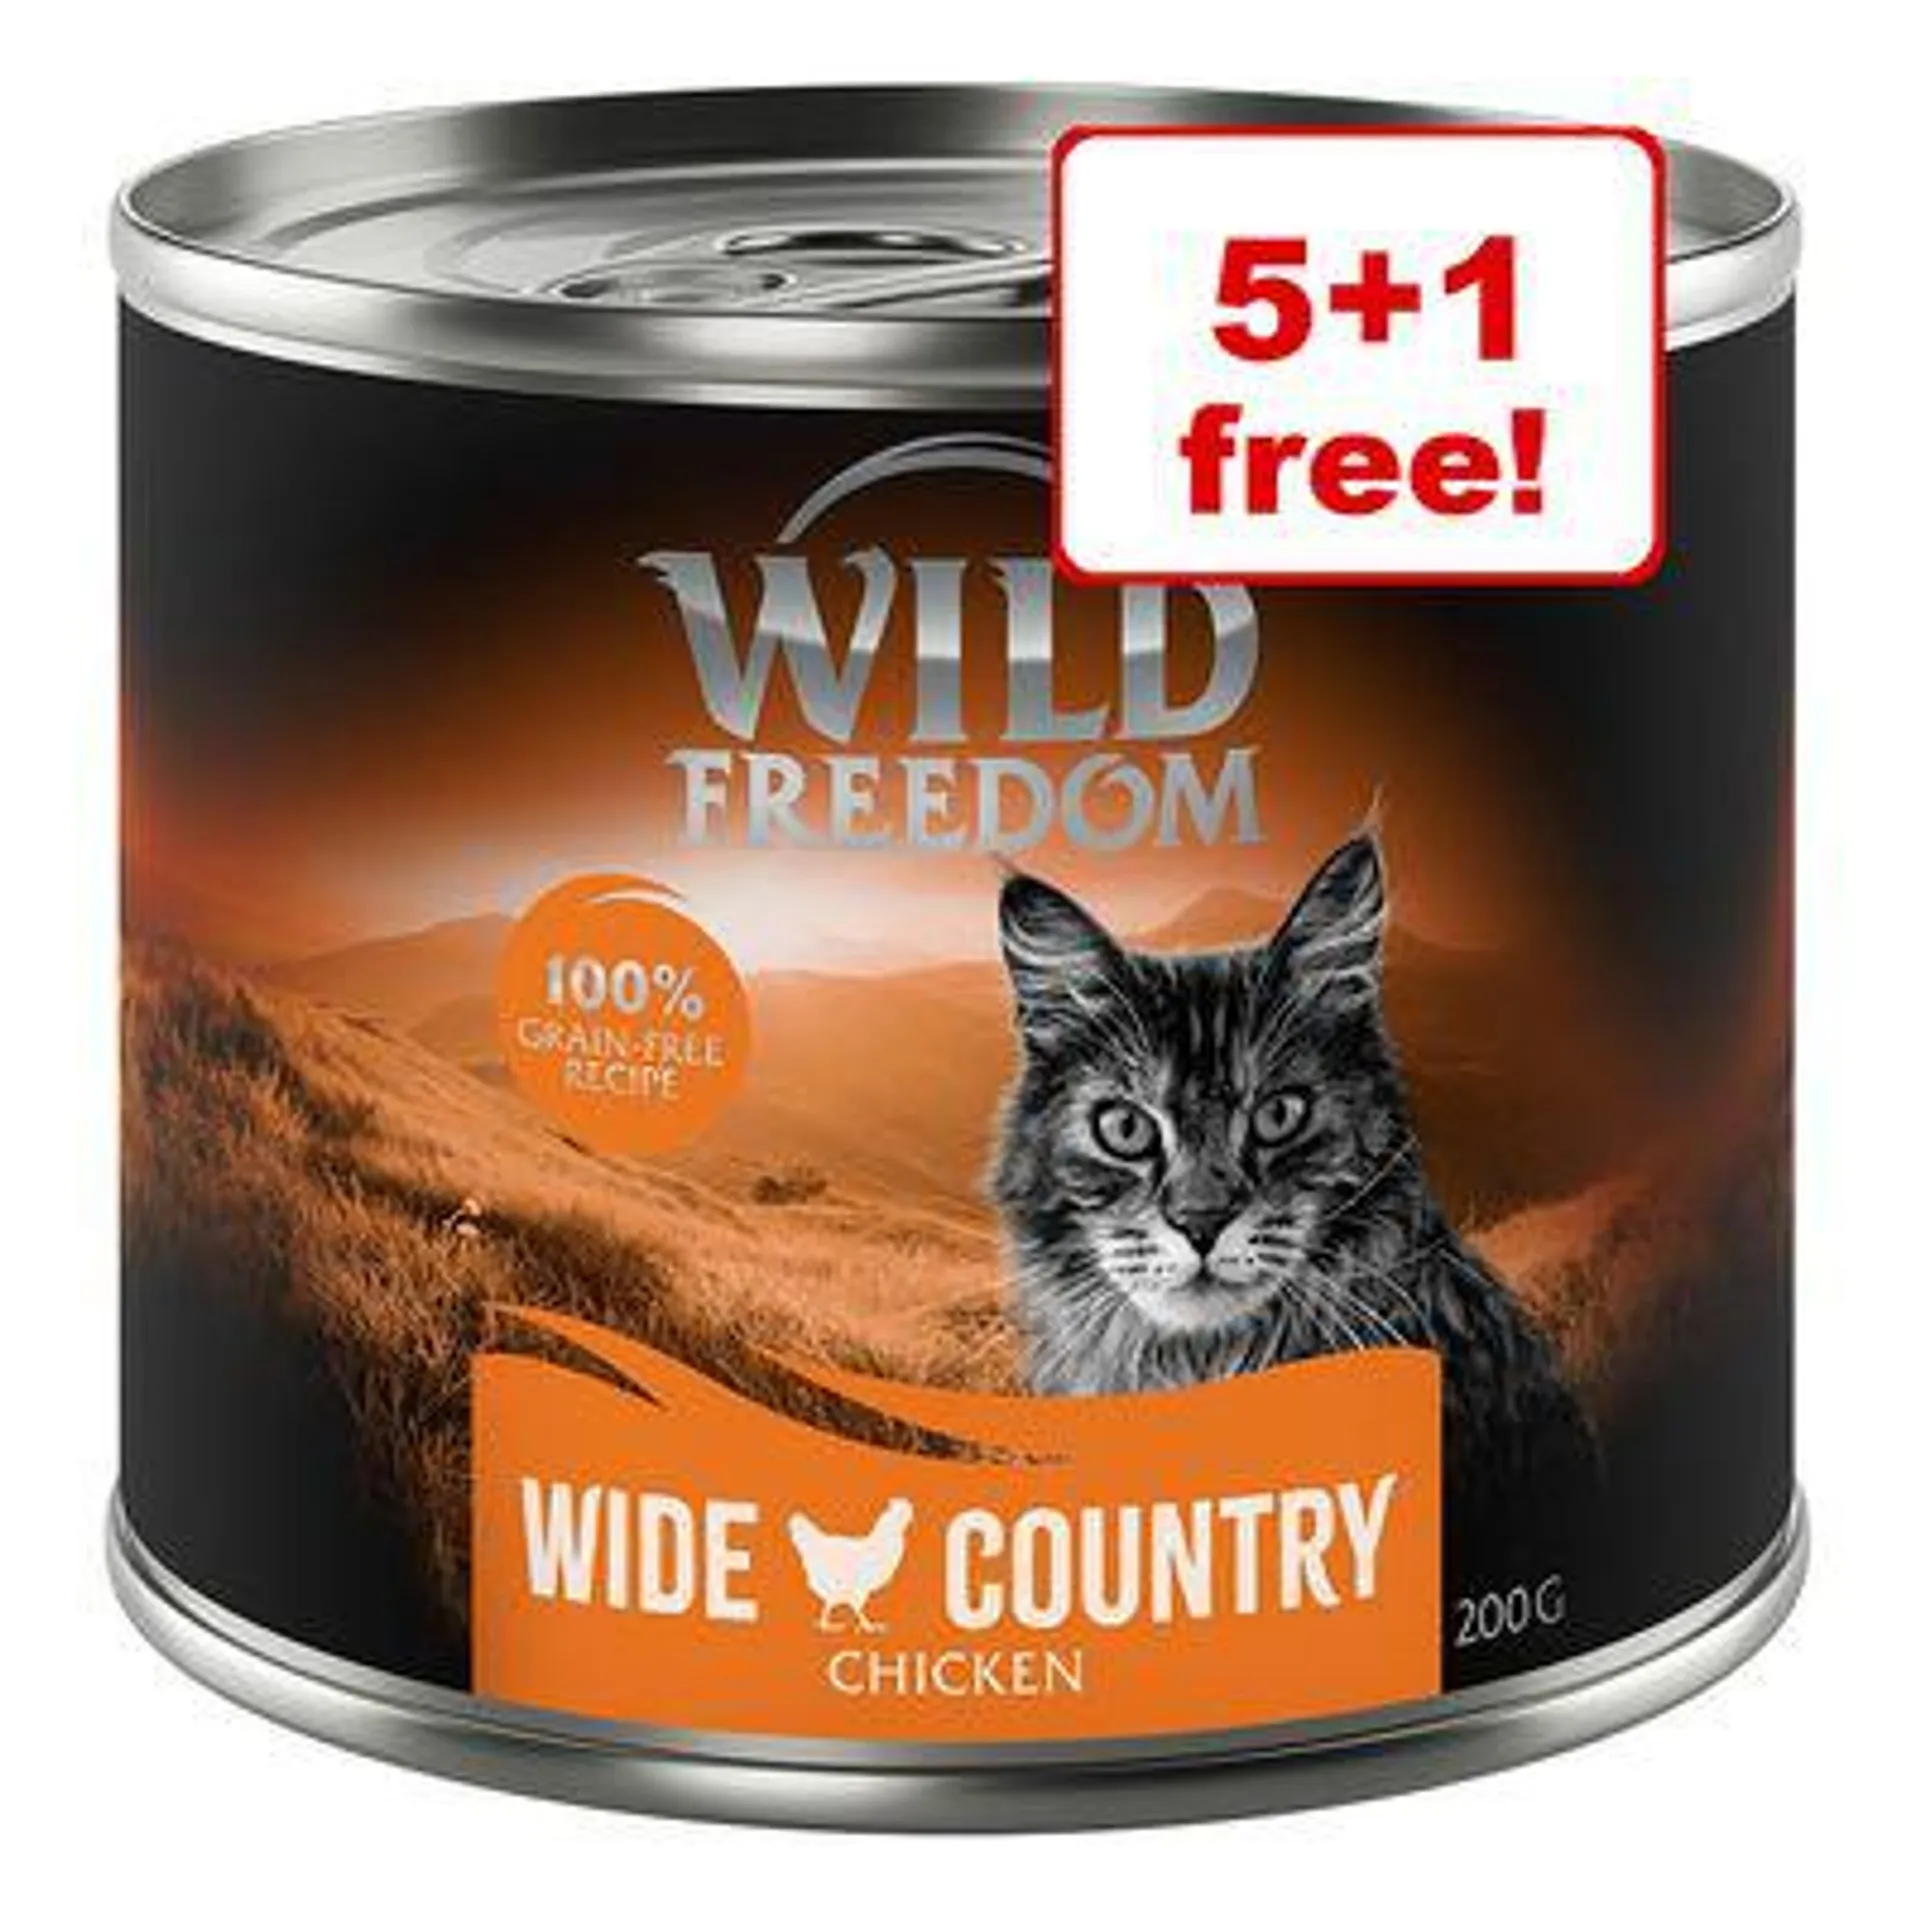 6 x 200g Wild Freedom Wet Cat Food - 5 + 1 Free! *